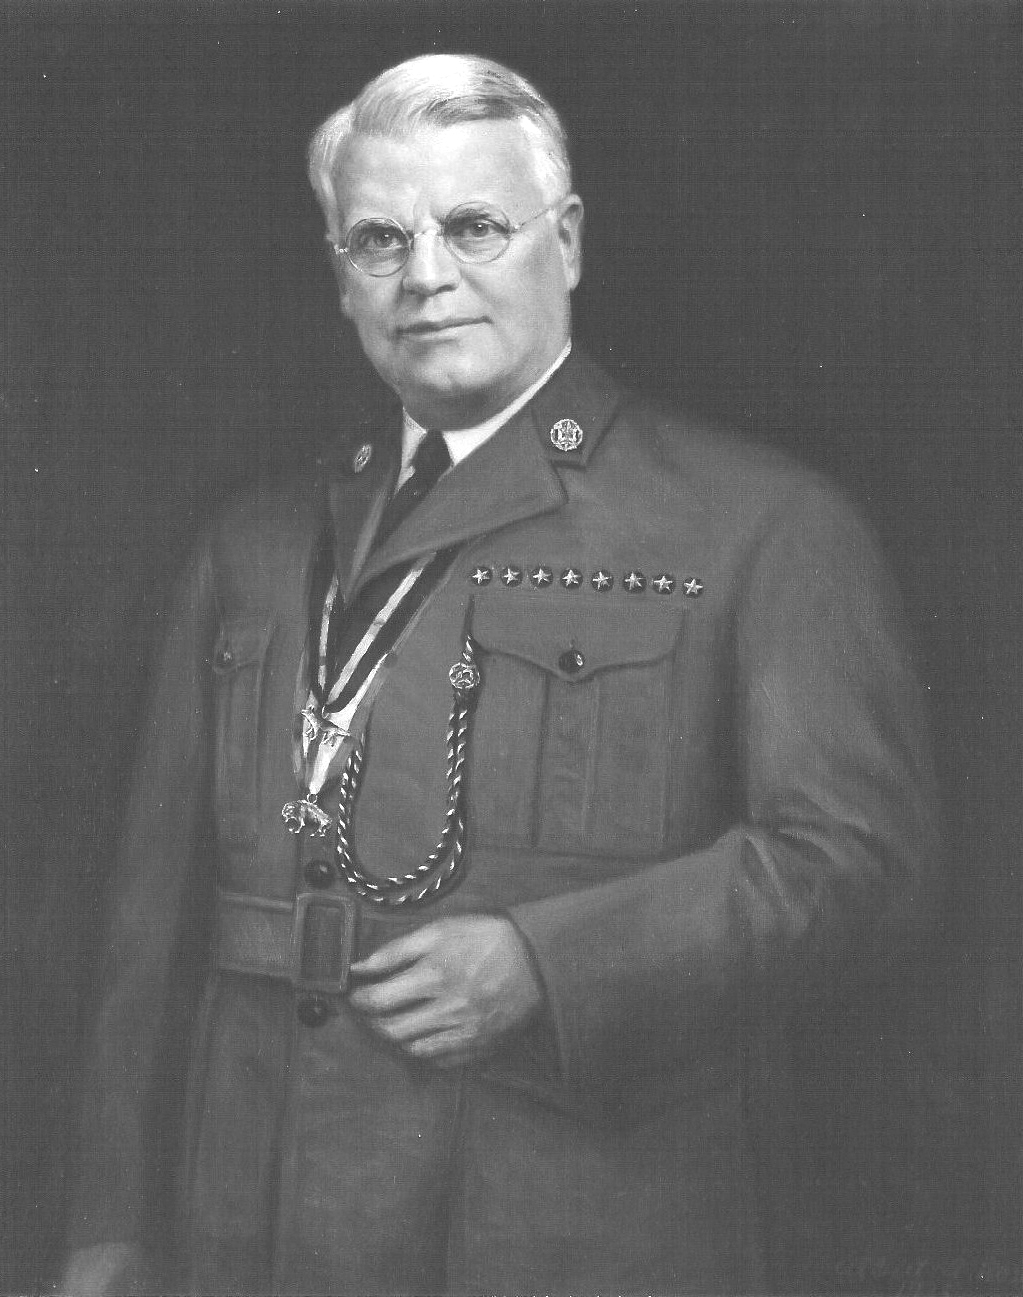 James E. West Chief Scout Executive